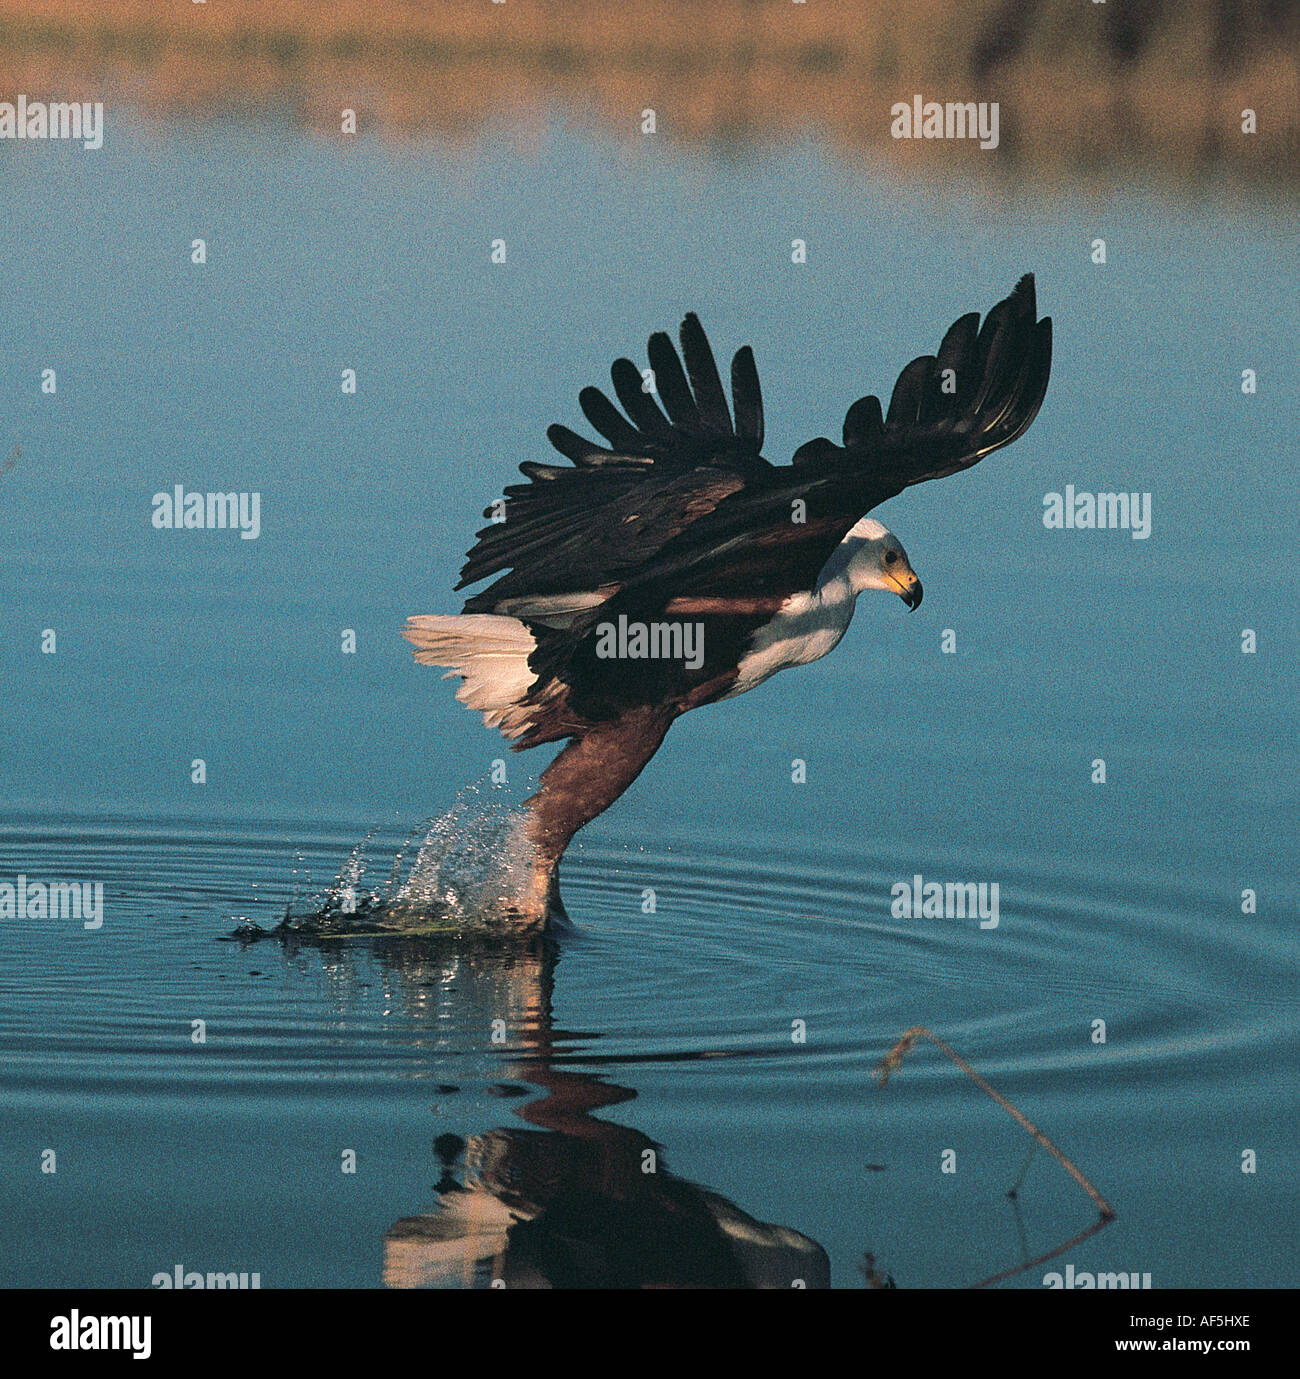 Águila pescadora humillarse para tratar de atrapar un pez del agua del Delta del Okavango Botswana África meridional Foto de stock